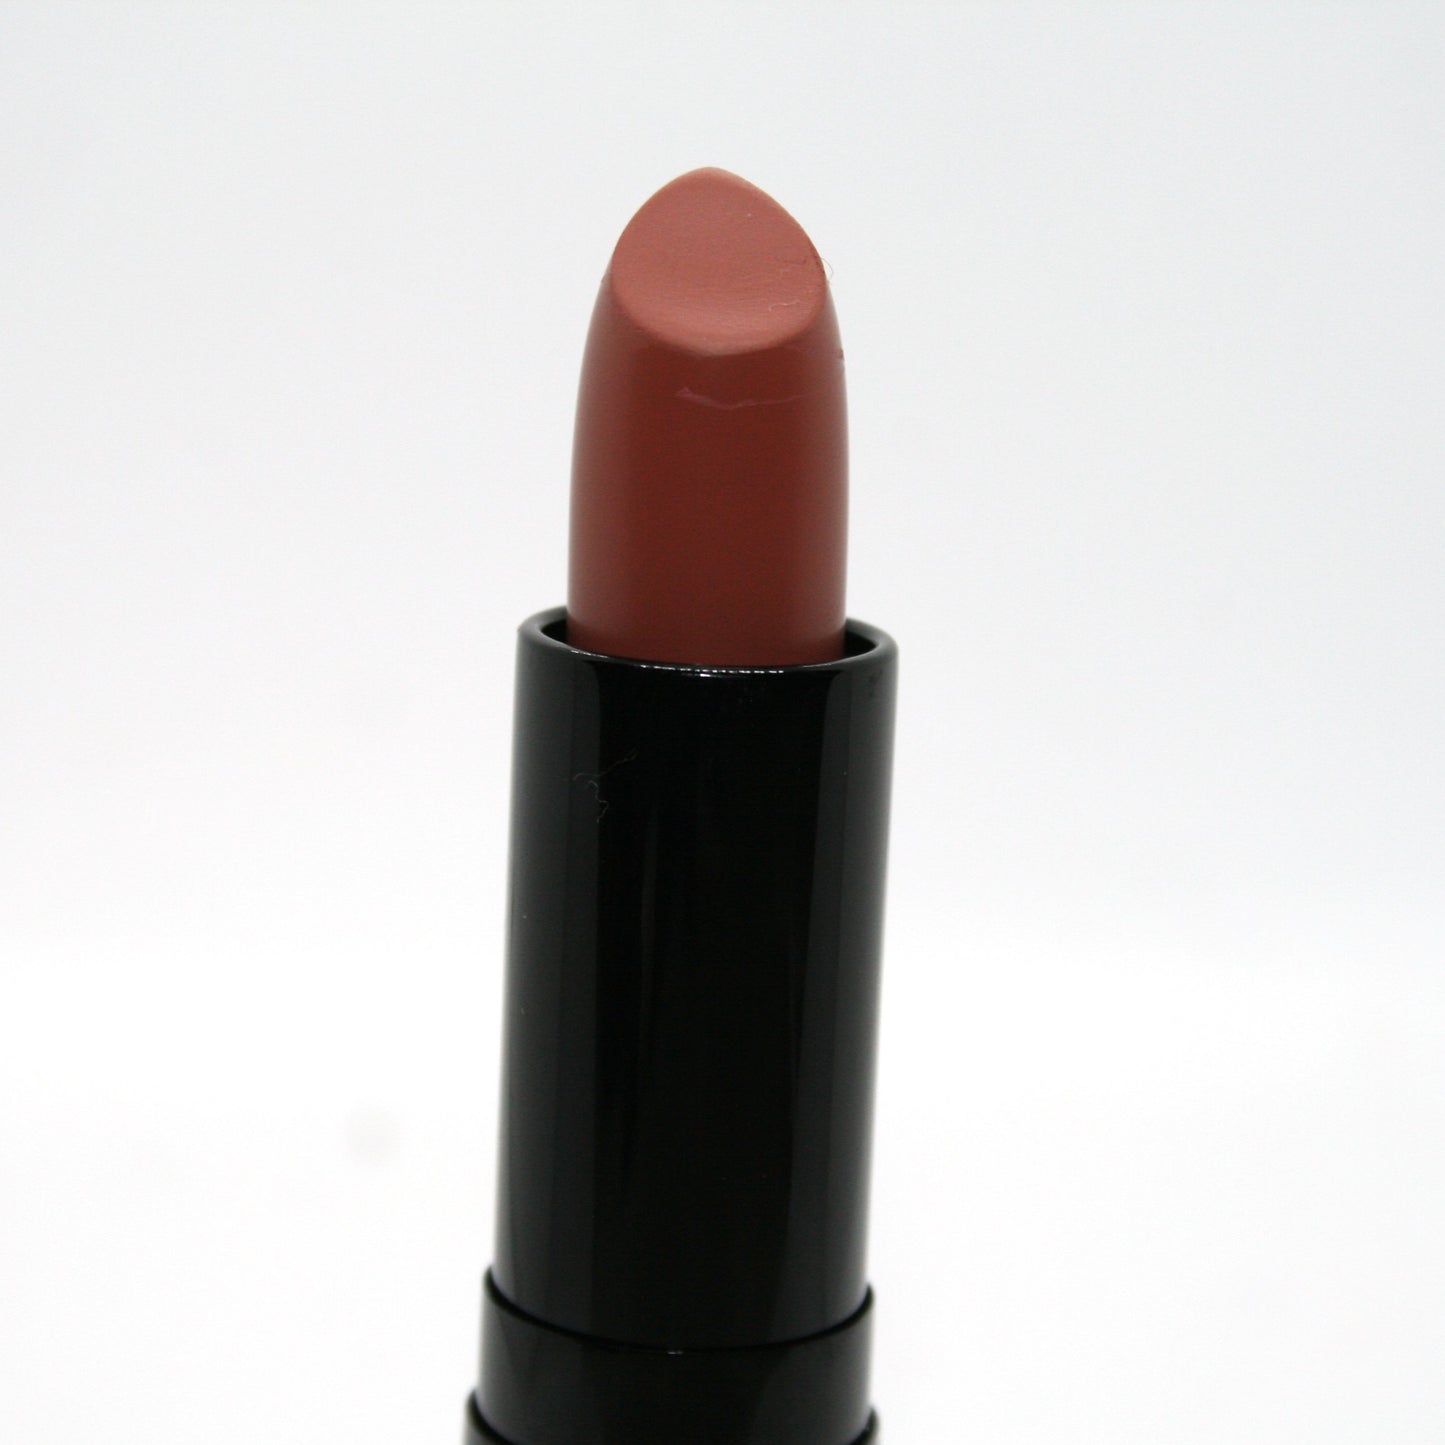 WhollyGloss N for Nude Vegan Cream Lipstick